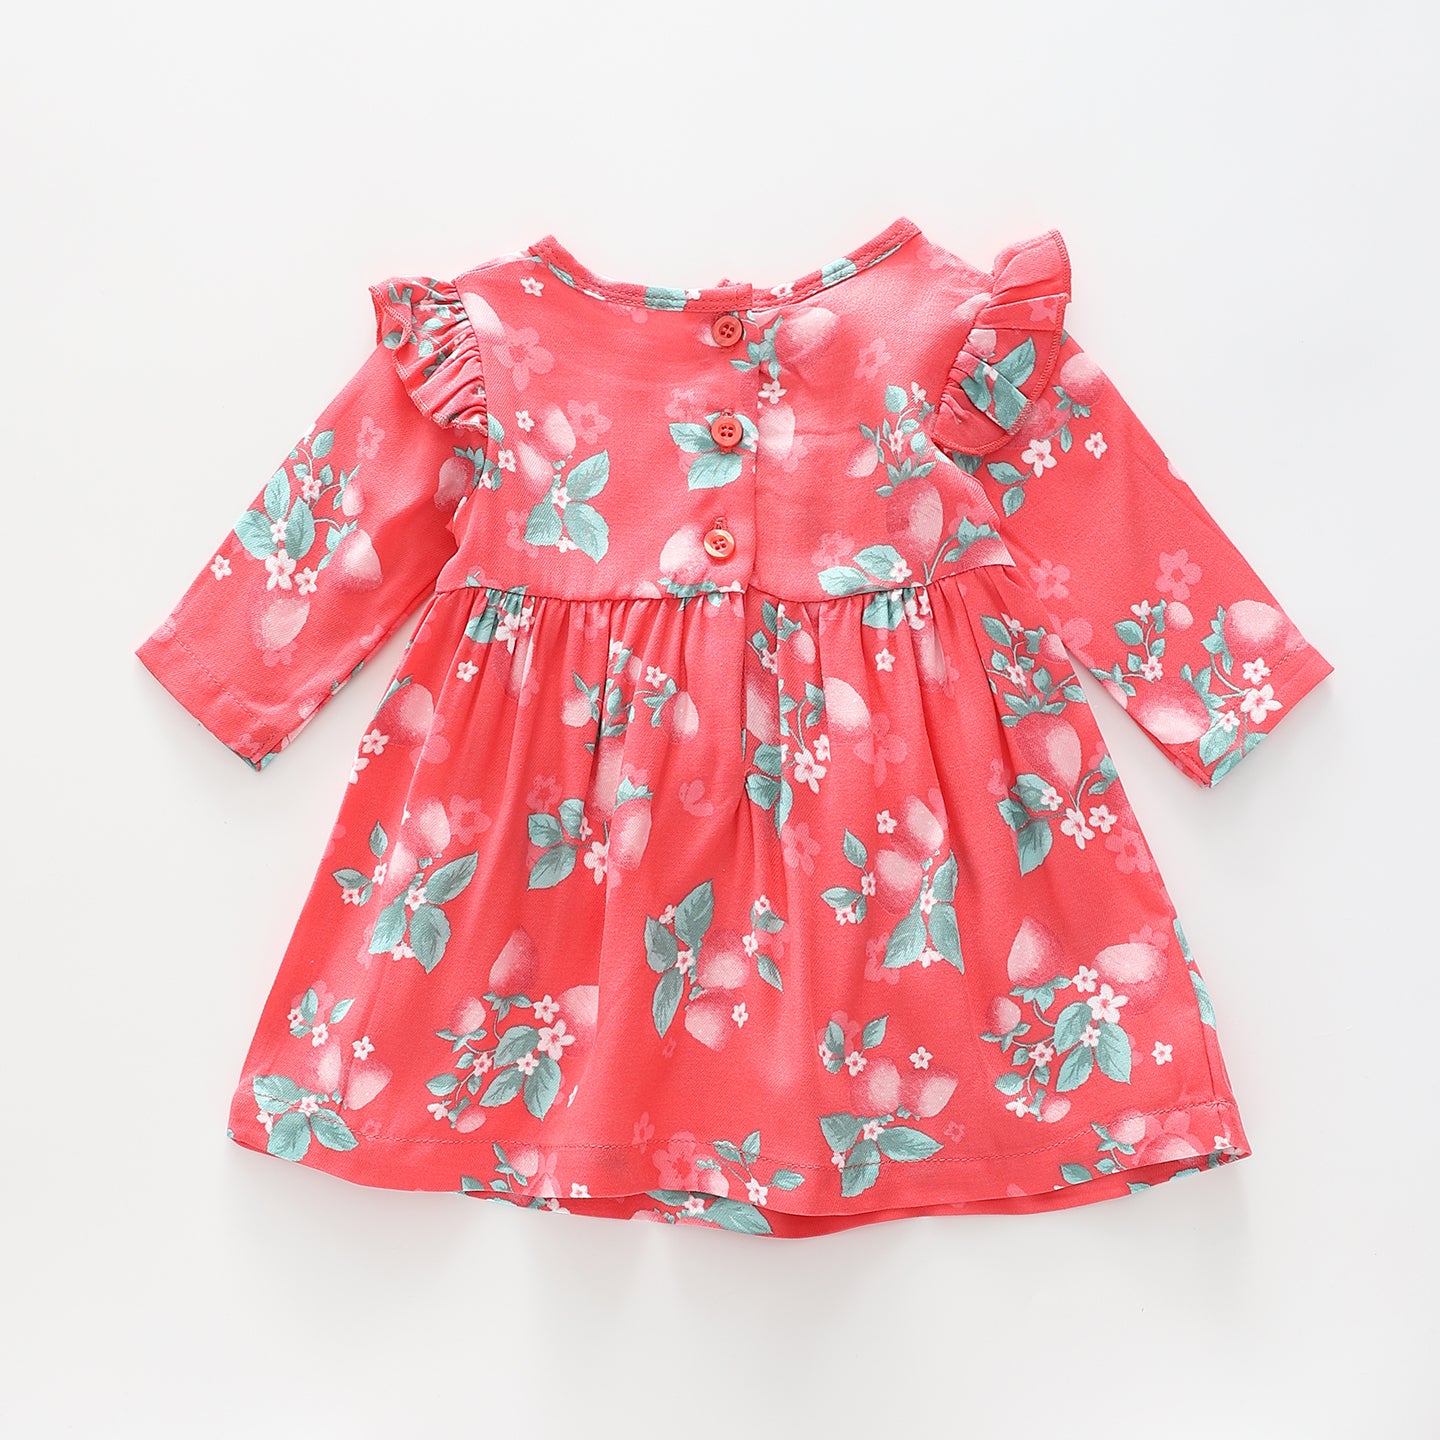 Strawberry Print Baby Girls' Dress